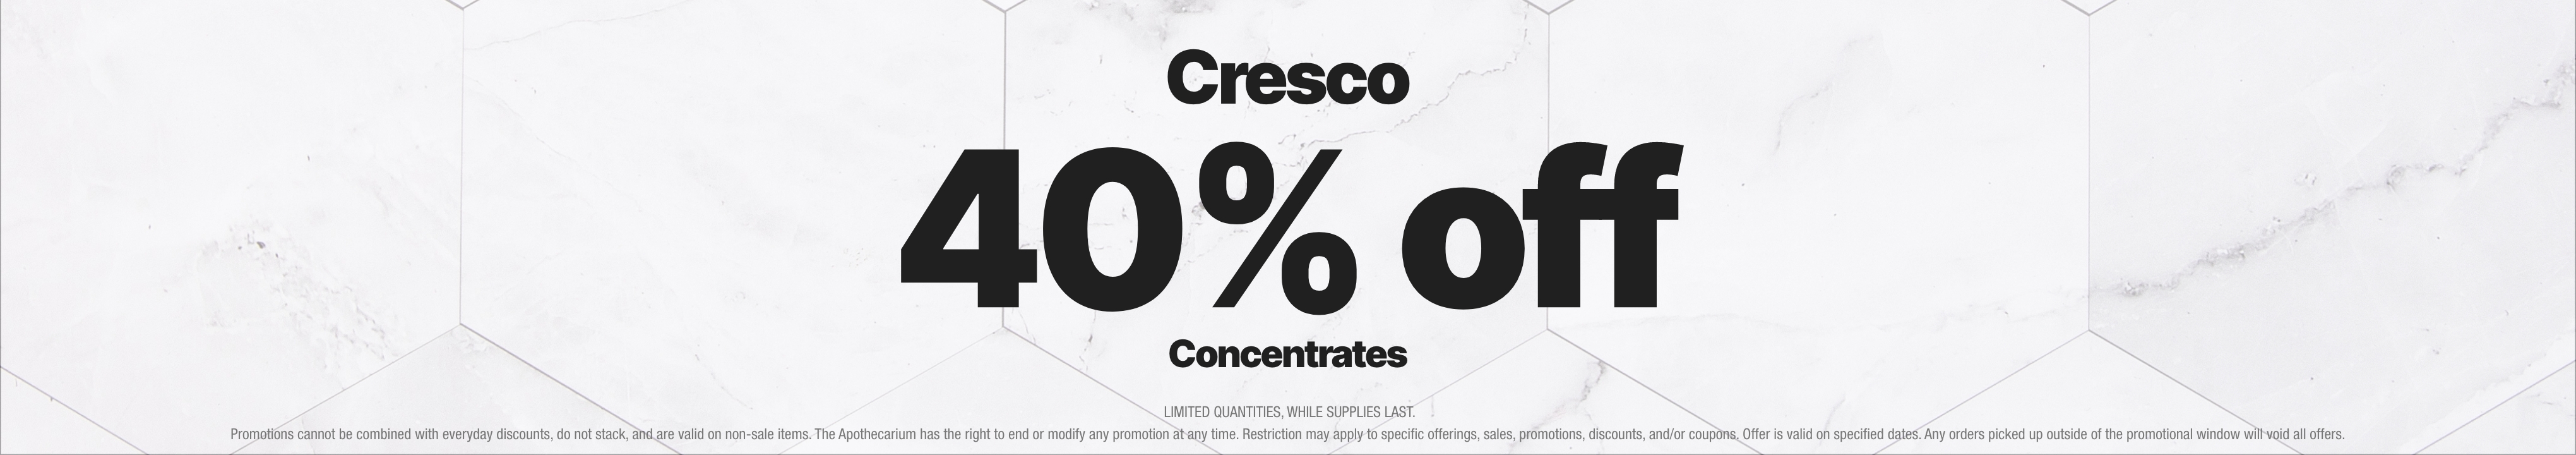 Cannabis Promo, Cannabis Sales, Cannabis Discounts, Cannabis on Sale, 40% Off Cresco Concentrates 